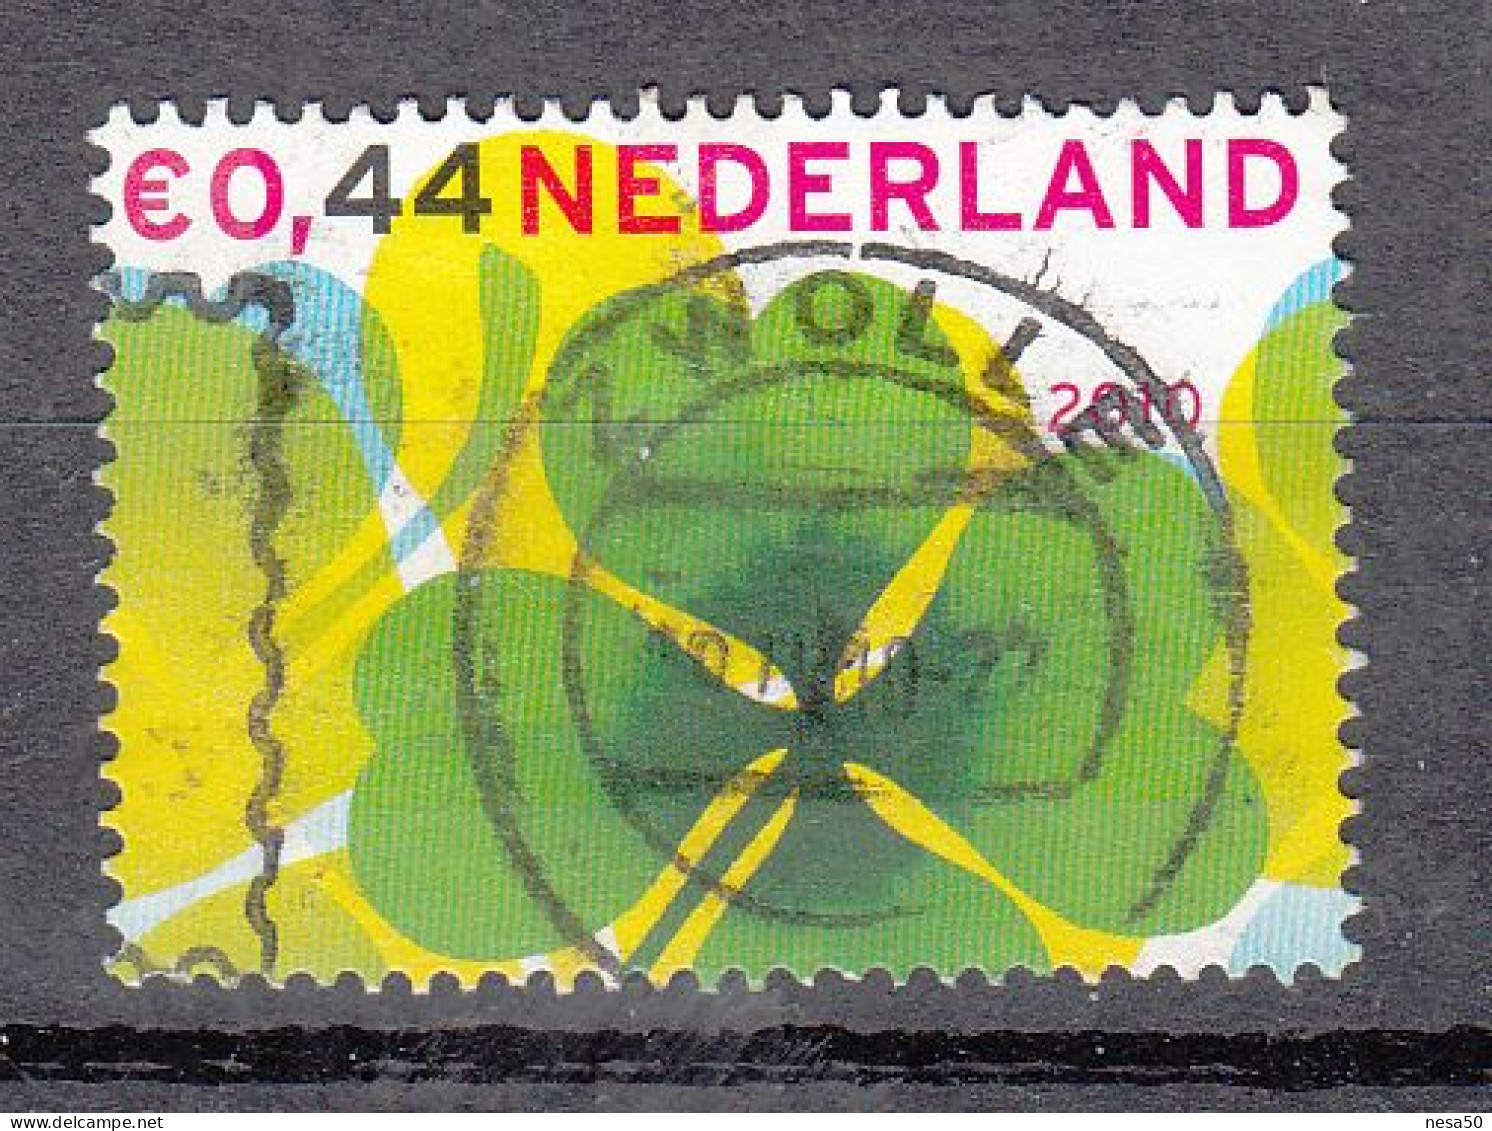 Nederland 2010 Nvph Nr 2713 A, Mi Nr 2742, Weken Van De Kaart - Used Stamps